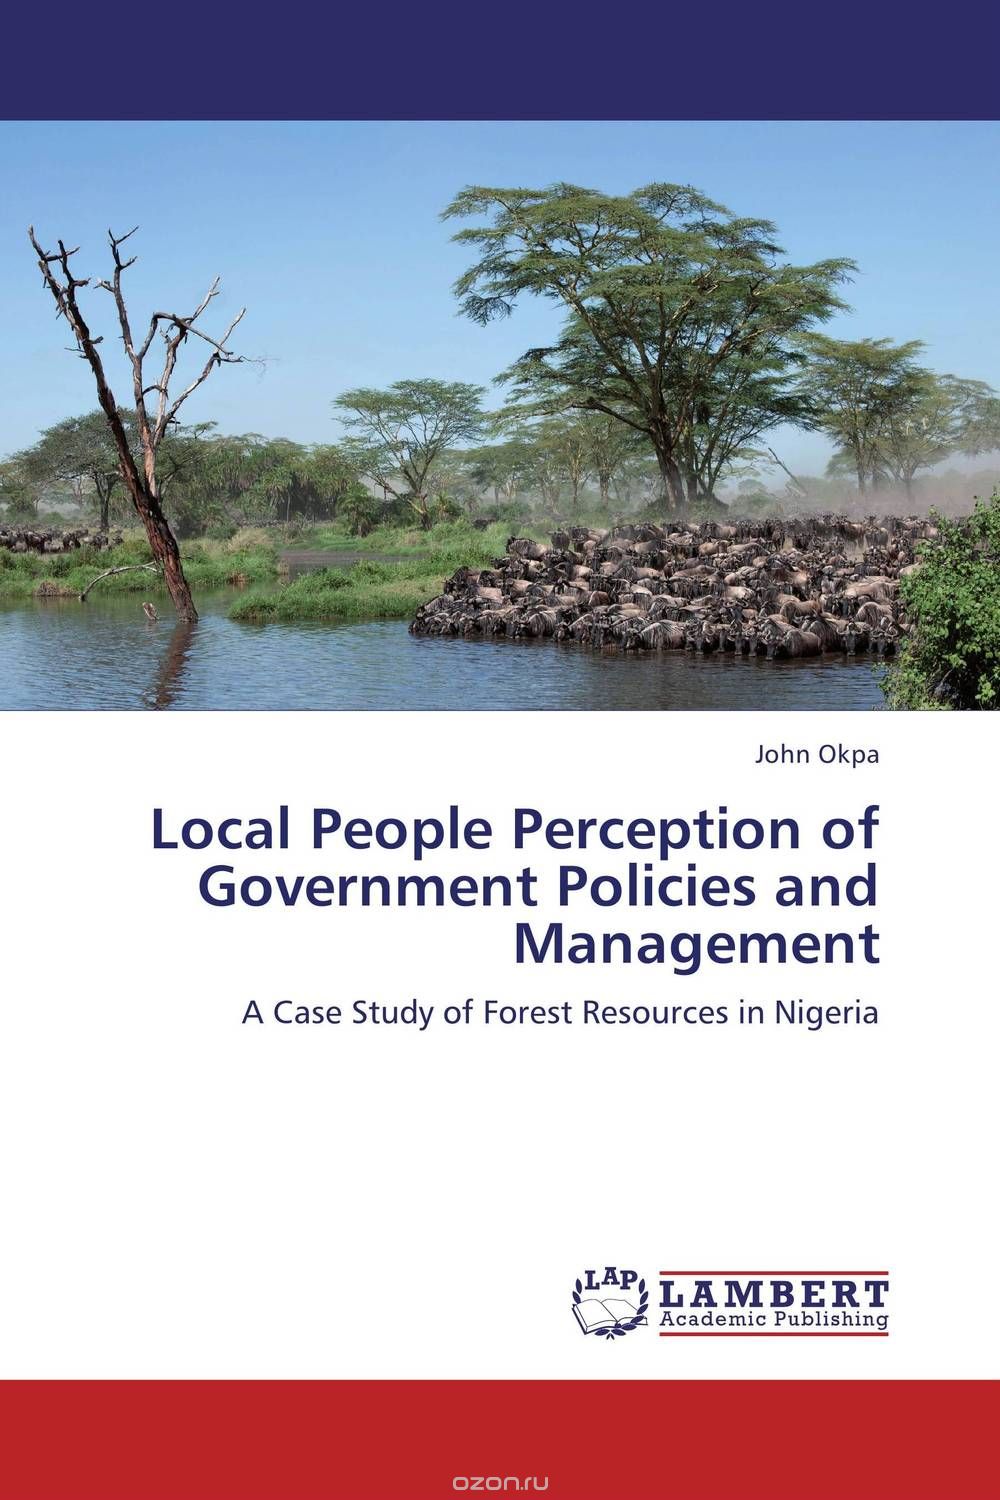 Скачать книгу "Local People Perception of Government Policies and Management"